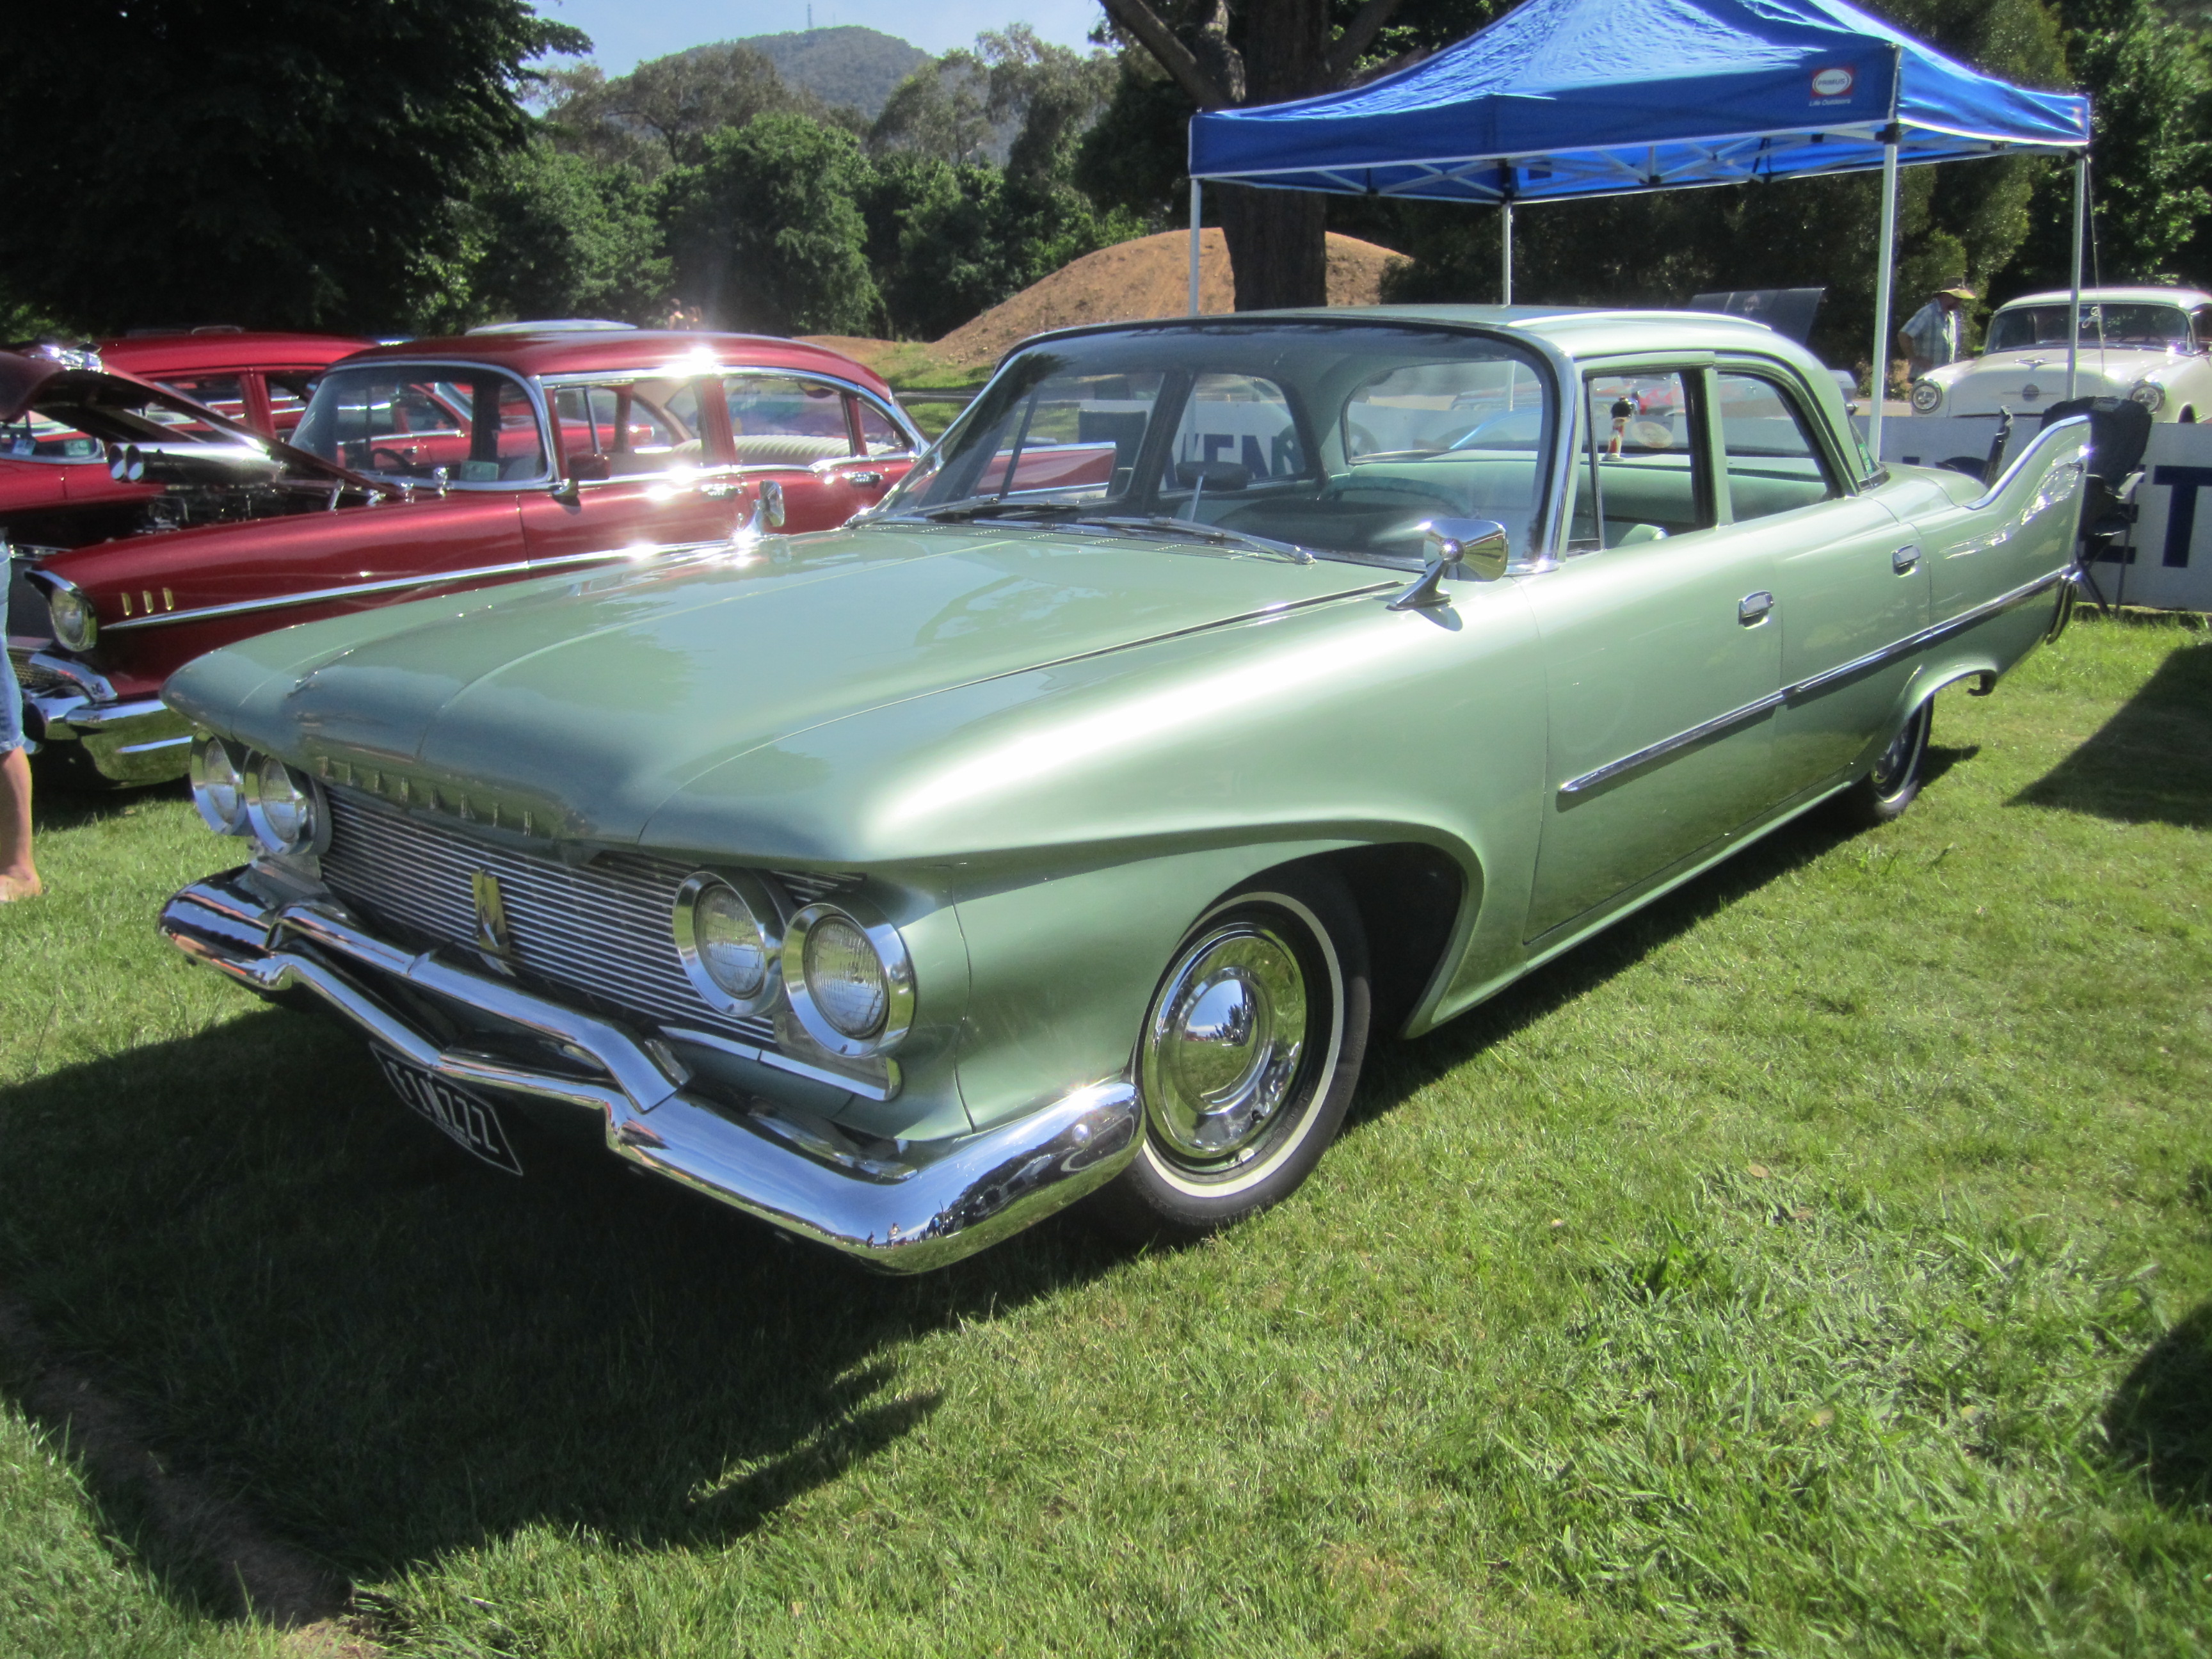 File:1960 Plymouth Belvedere Sedan - Flickr - Sicnag.jpg - Wikipedia